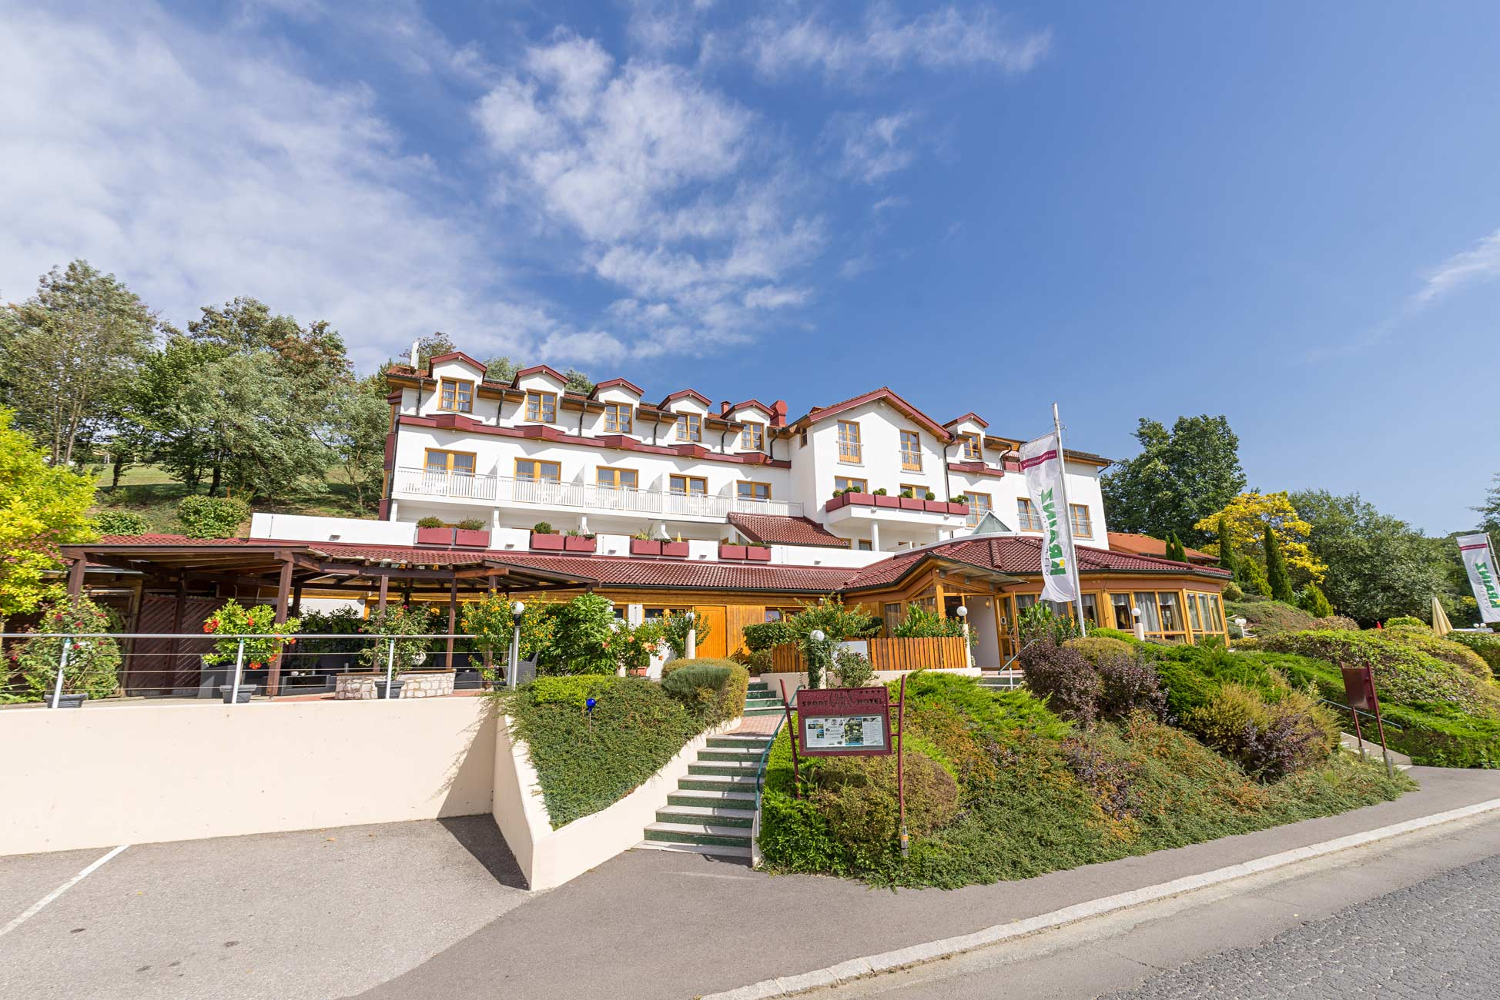 Krainz Hotels Loipersdorf